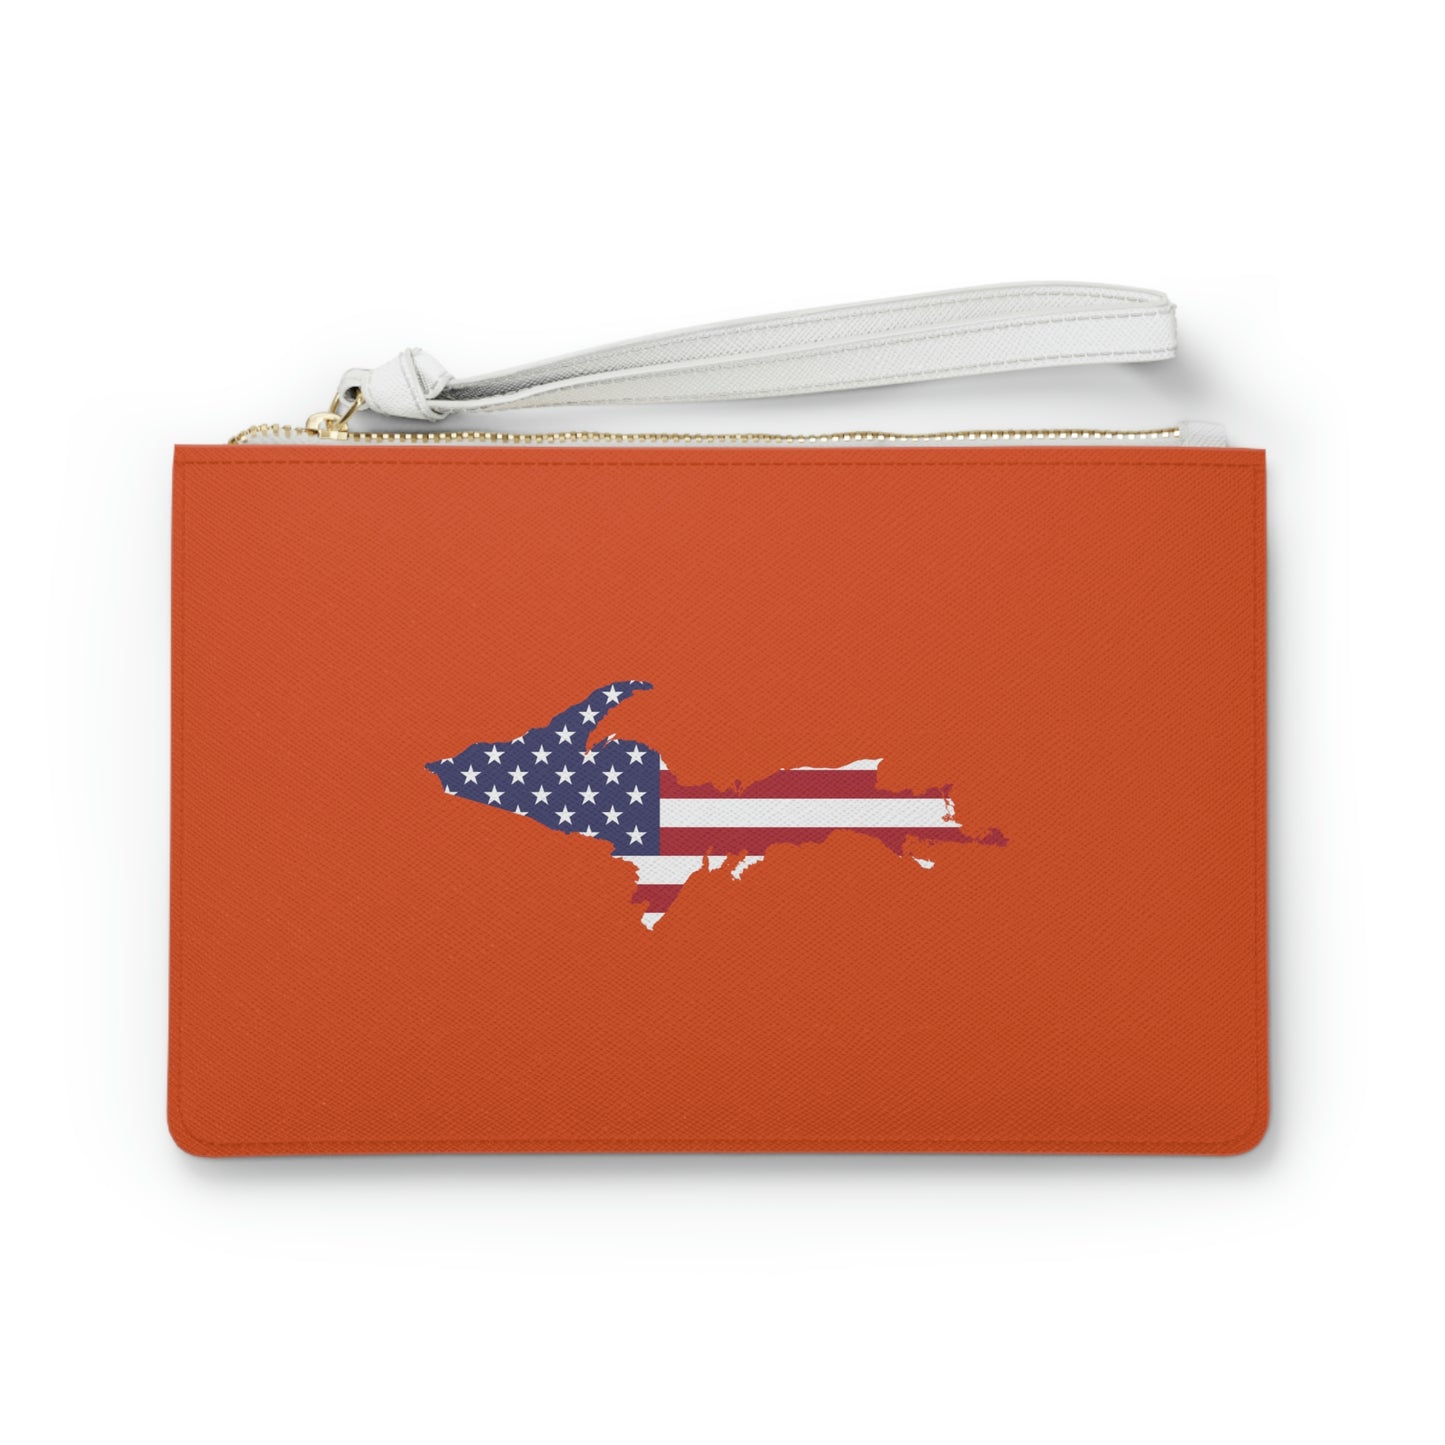 Michigan Upper Peninsula Clutch Bag (Maple Leaf Orange w/UP USA Flag Outline)